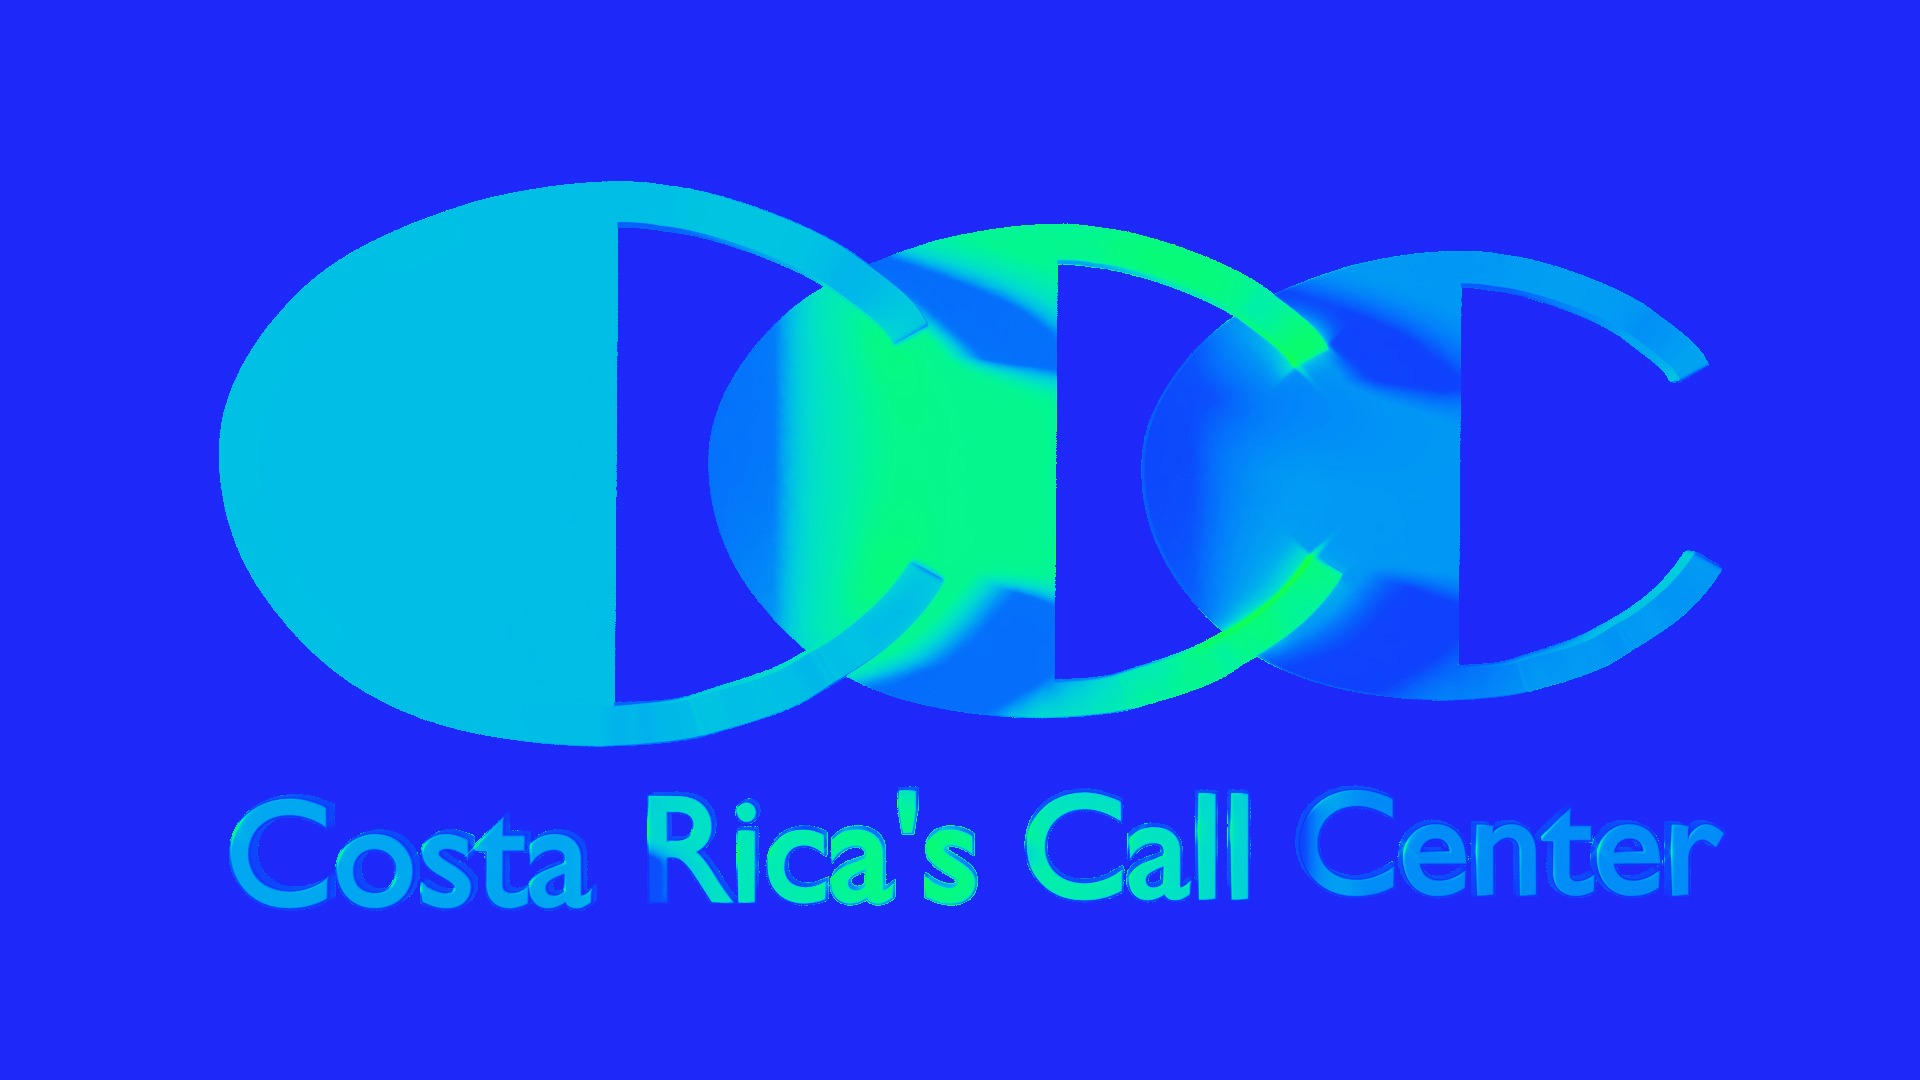 VIRTUAL ASSISTANT ADVISE COSTA RICA.jpg  by richardblank